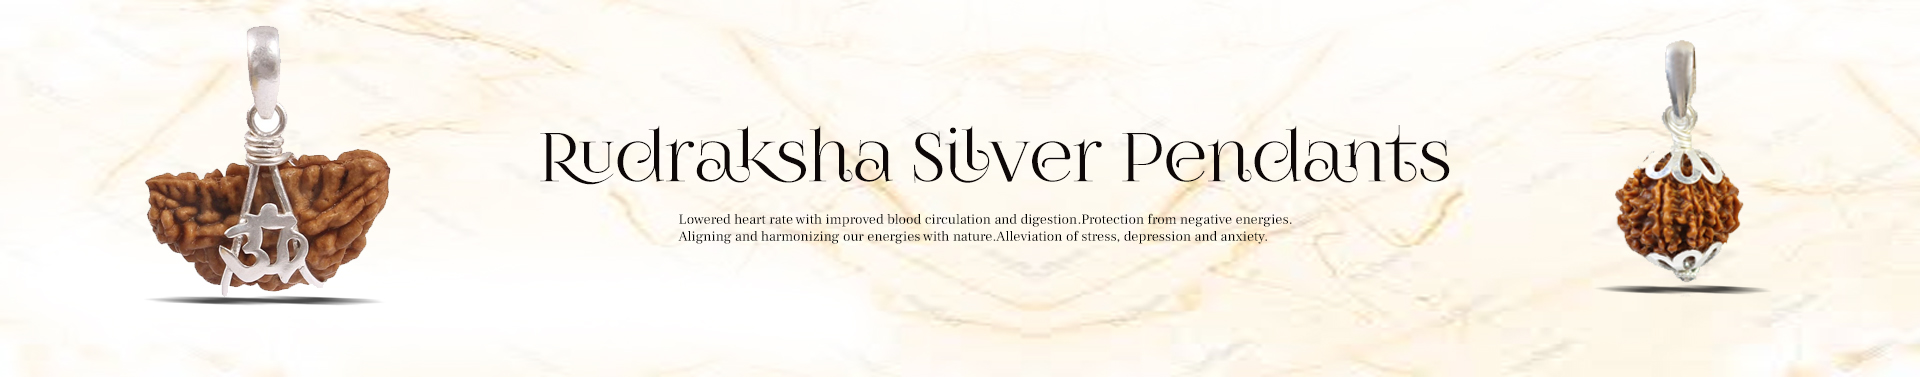 Rudraksha Silver Pendants